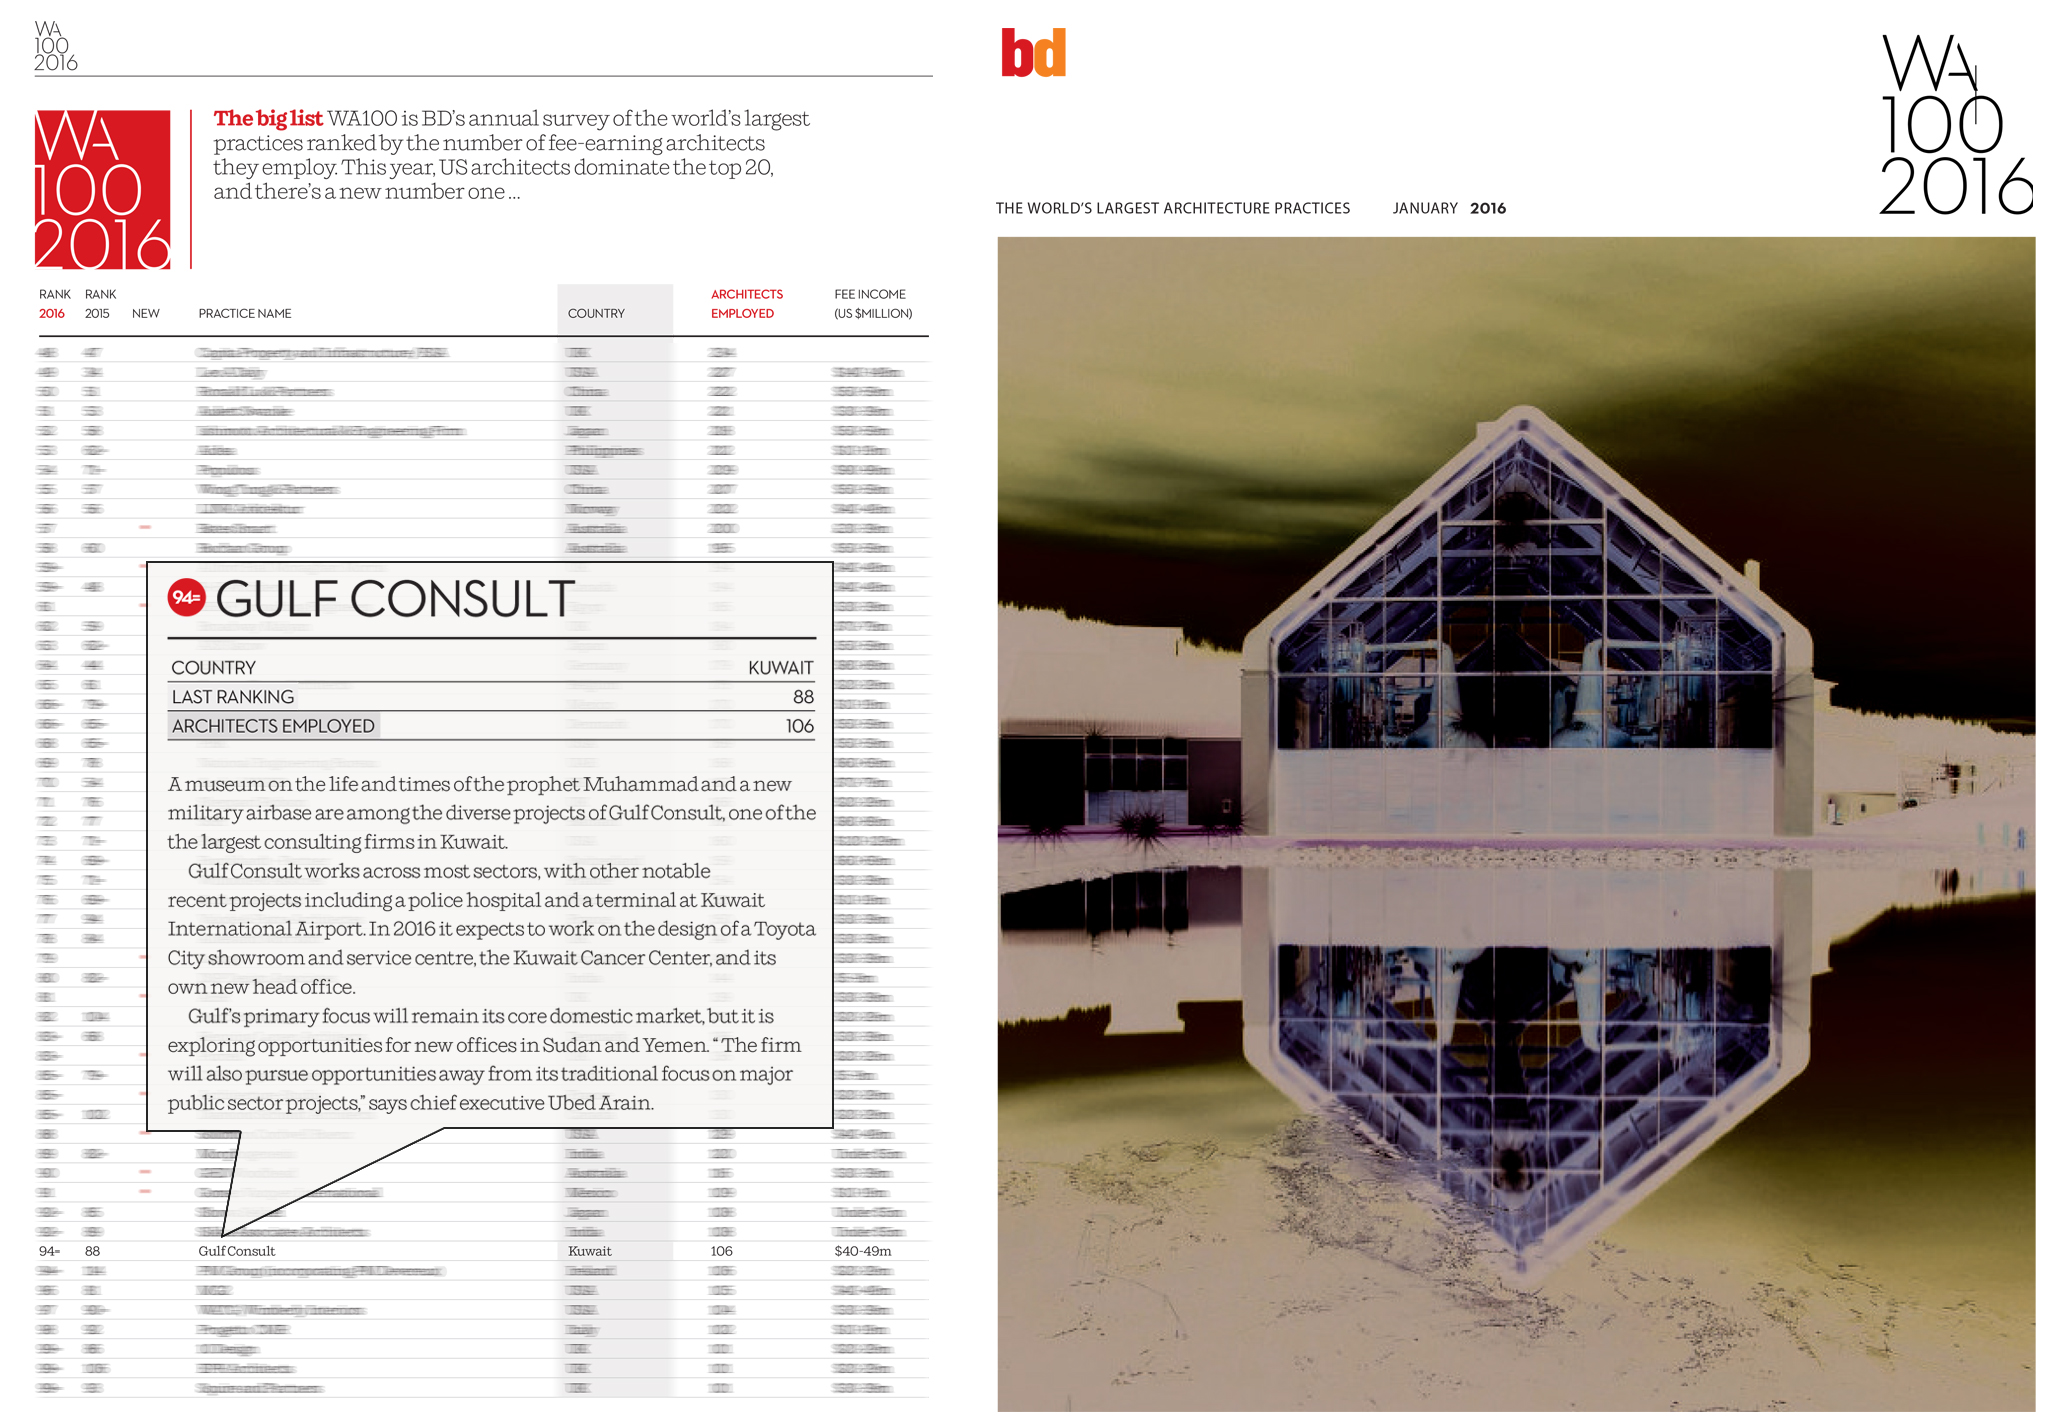 GC World Architecture Ranking 2016 – Gulf Consult